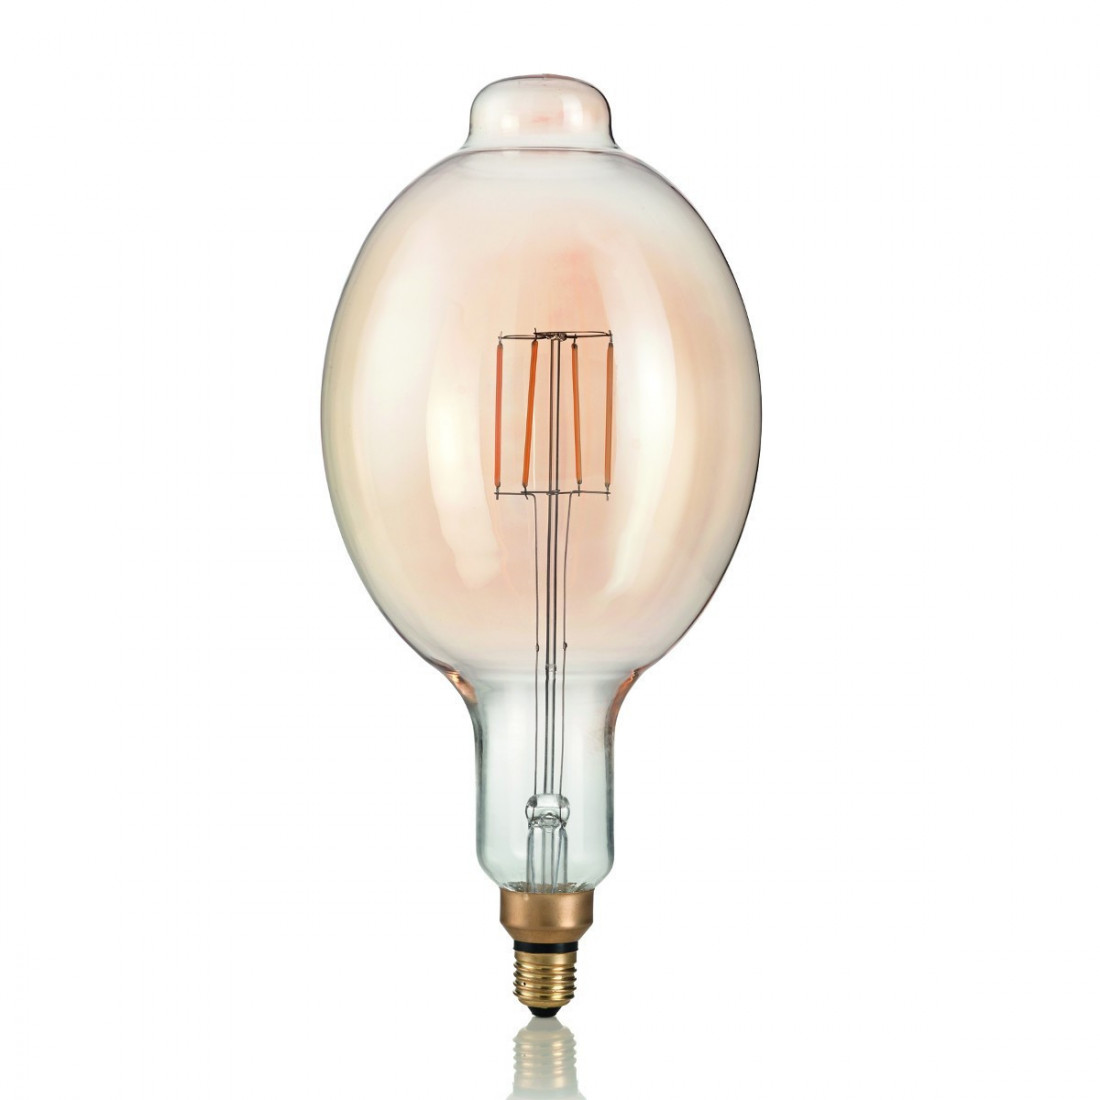 Lampadina ID-VINTAGE XL E27 4W LED 320LM vetro ambra bombato retrò luce caldissima interno